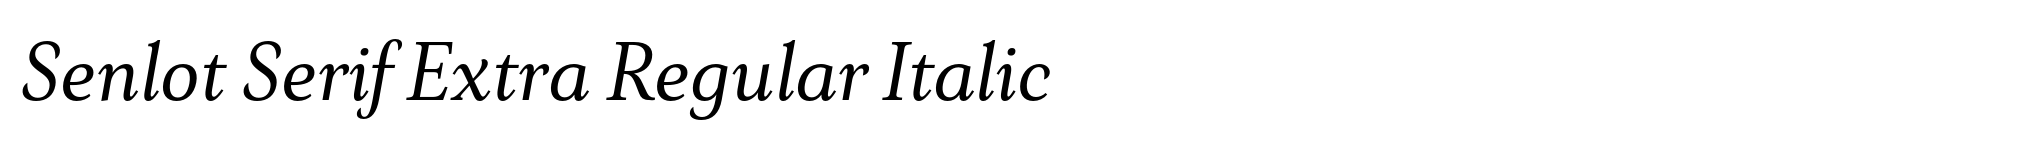 Senlot Serif Extra Regular Italic image